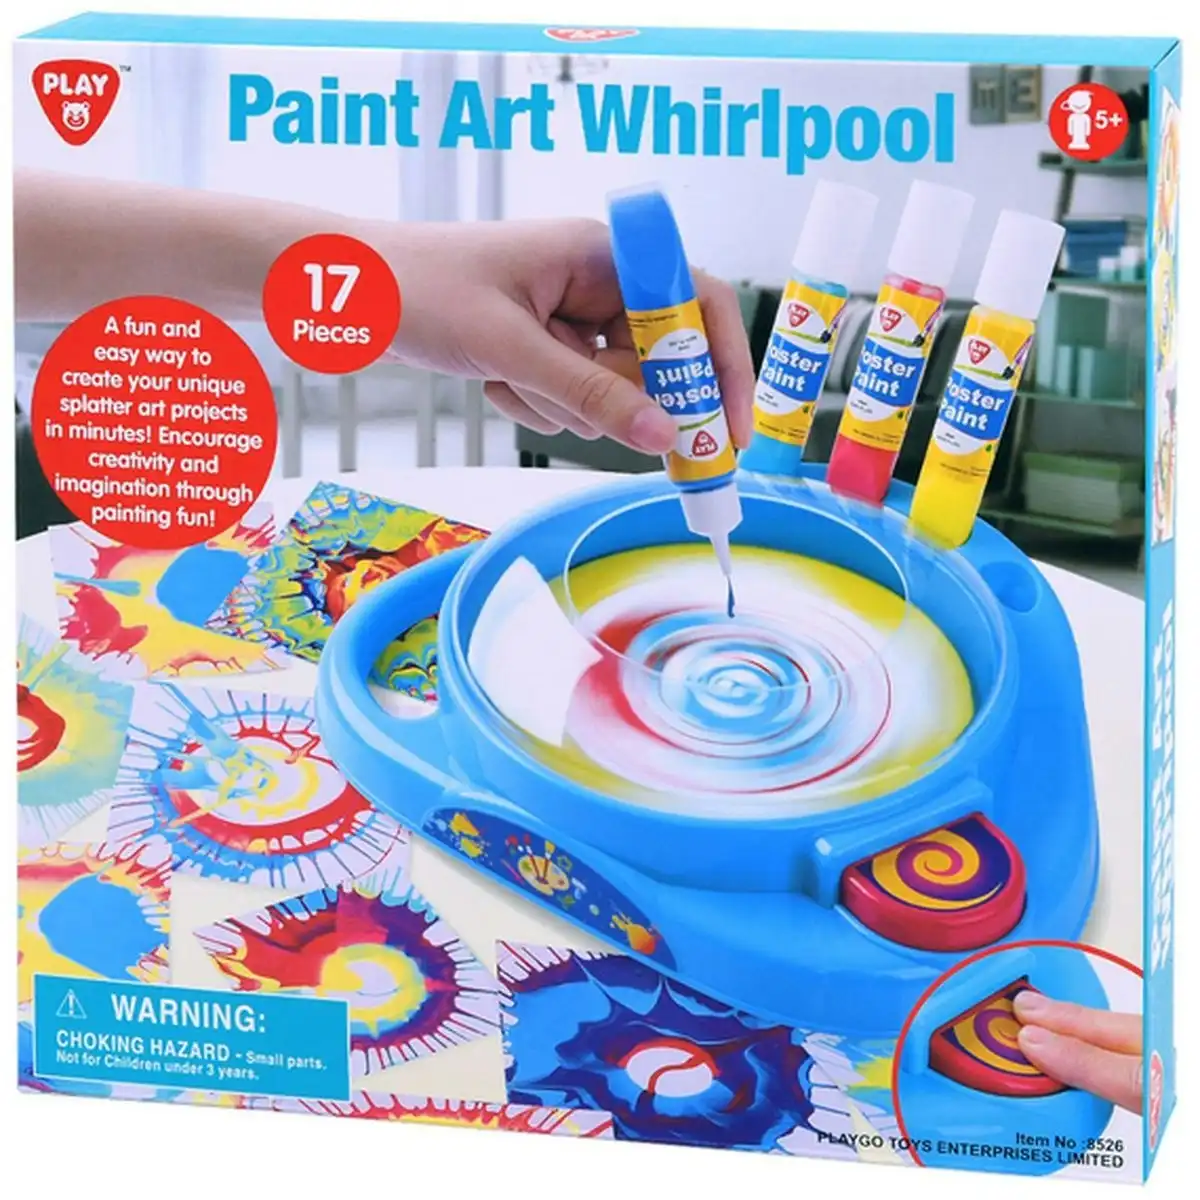 Paint Art Whirlpool Set   Playgo Toys Ent. Ltd